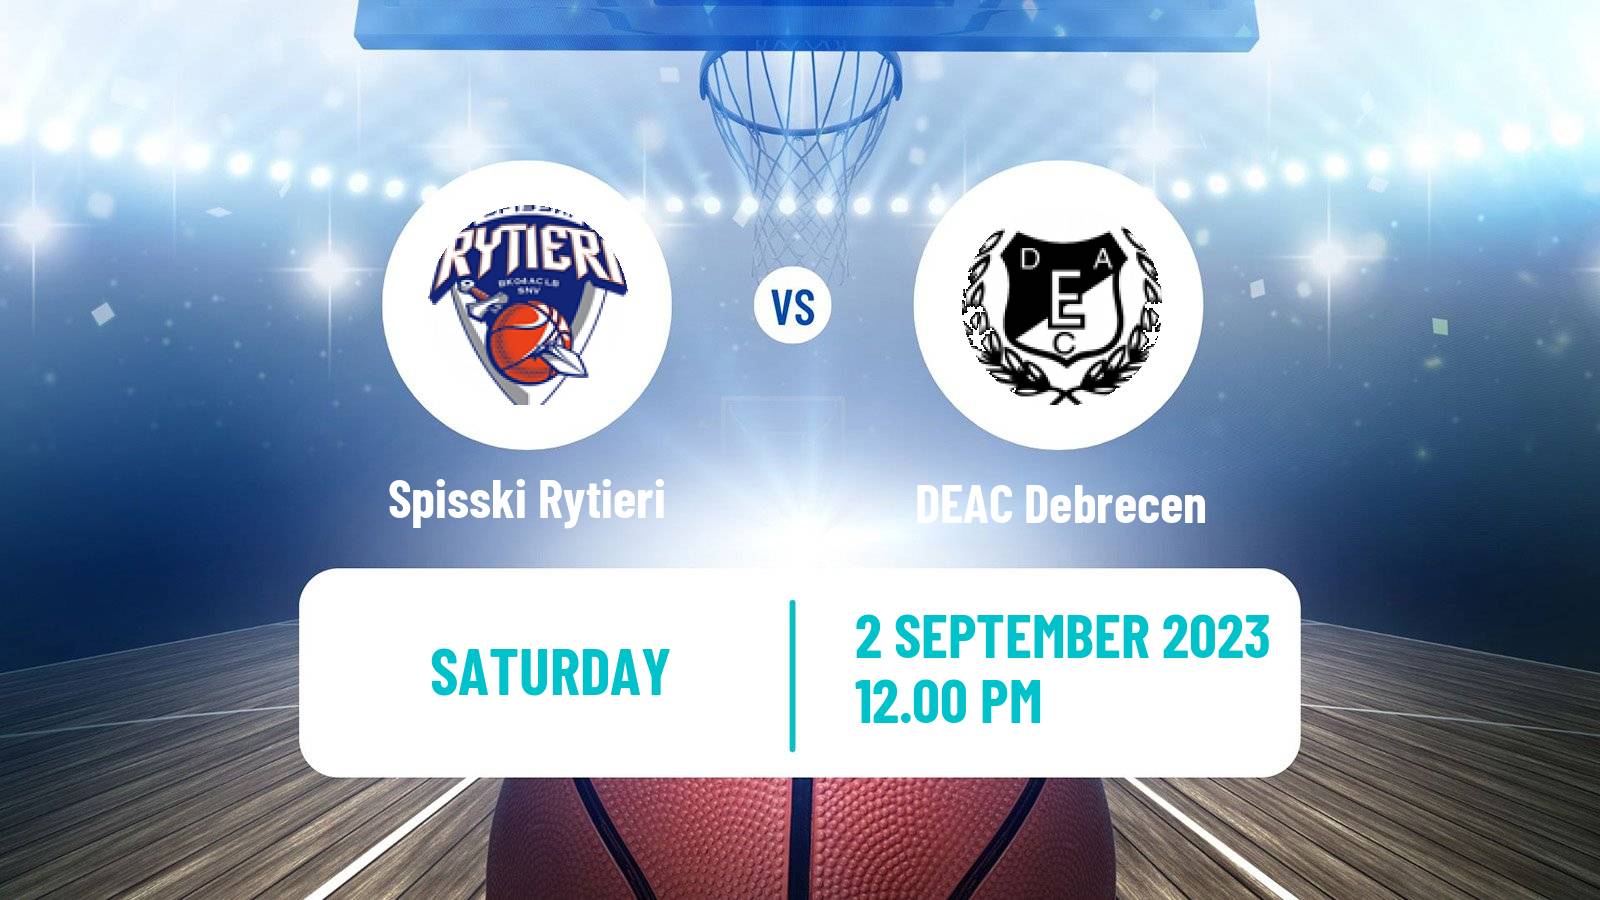 Basketball Club Friendly Basketball Spisski Rytieri - DEAC Debrecen